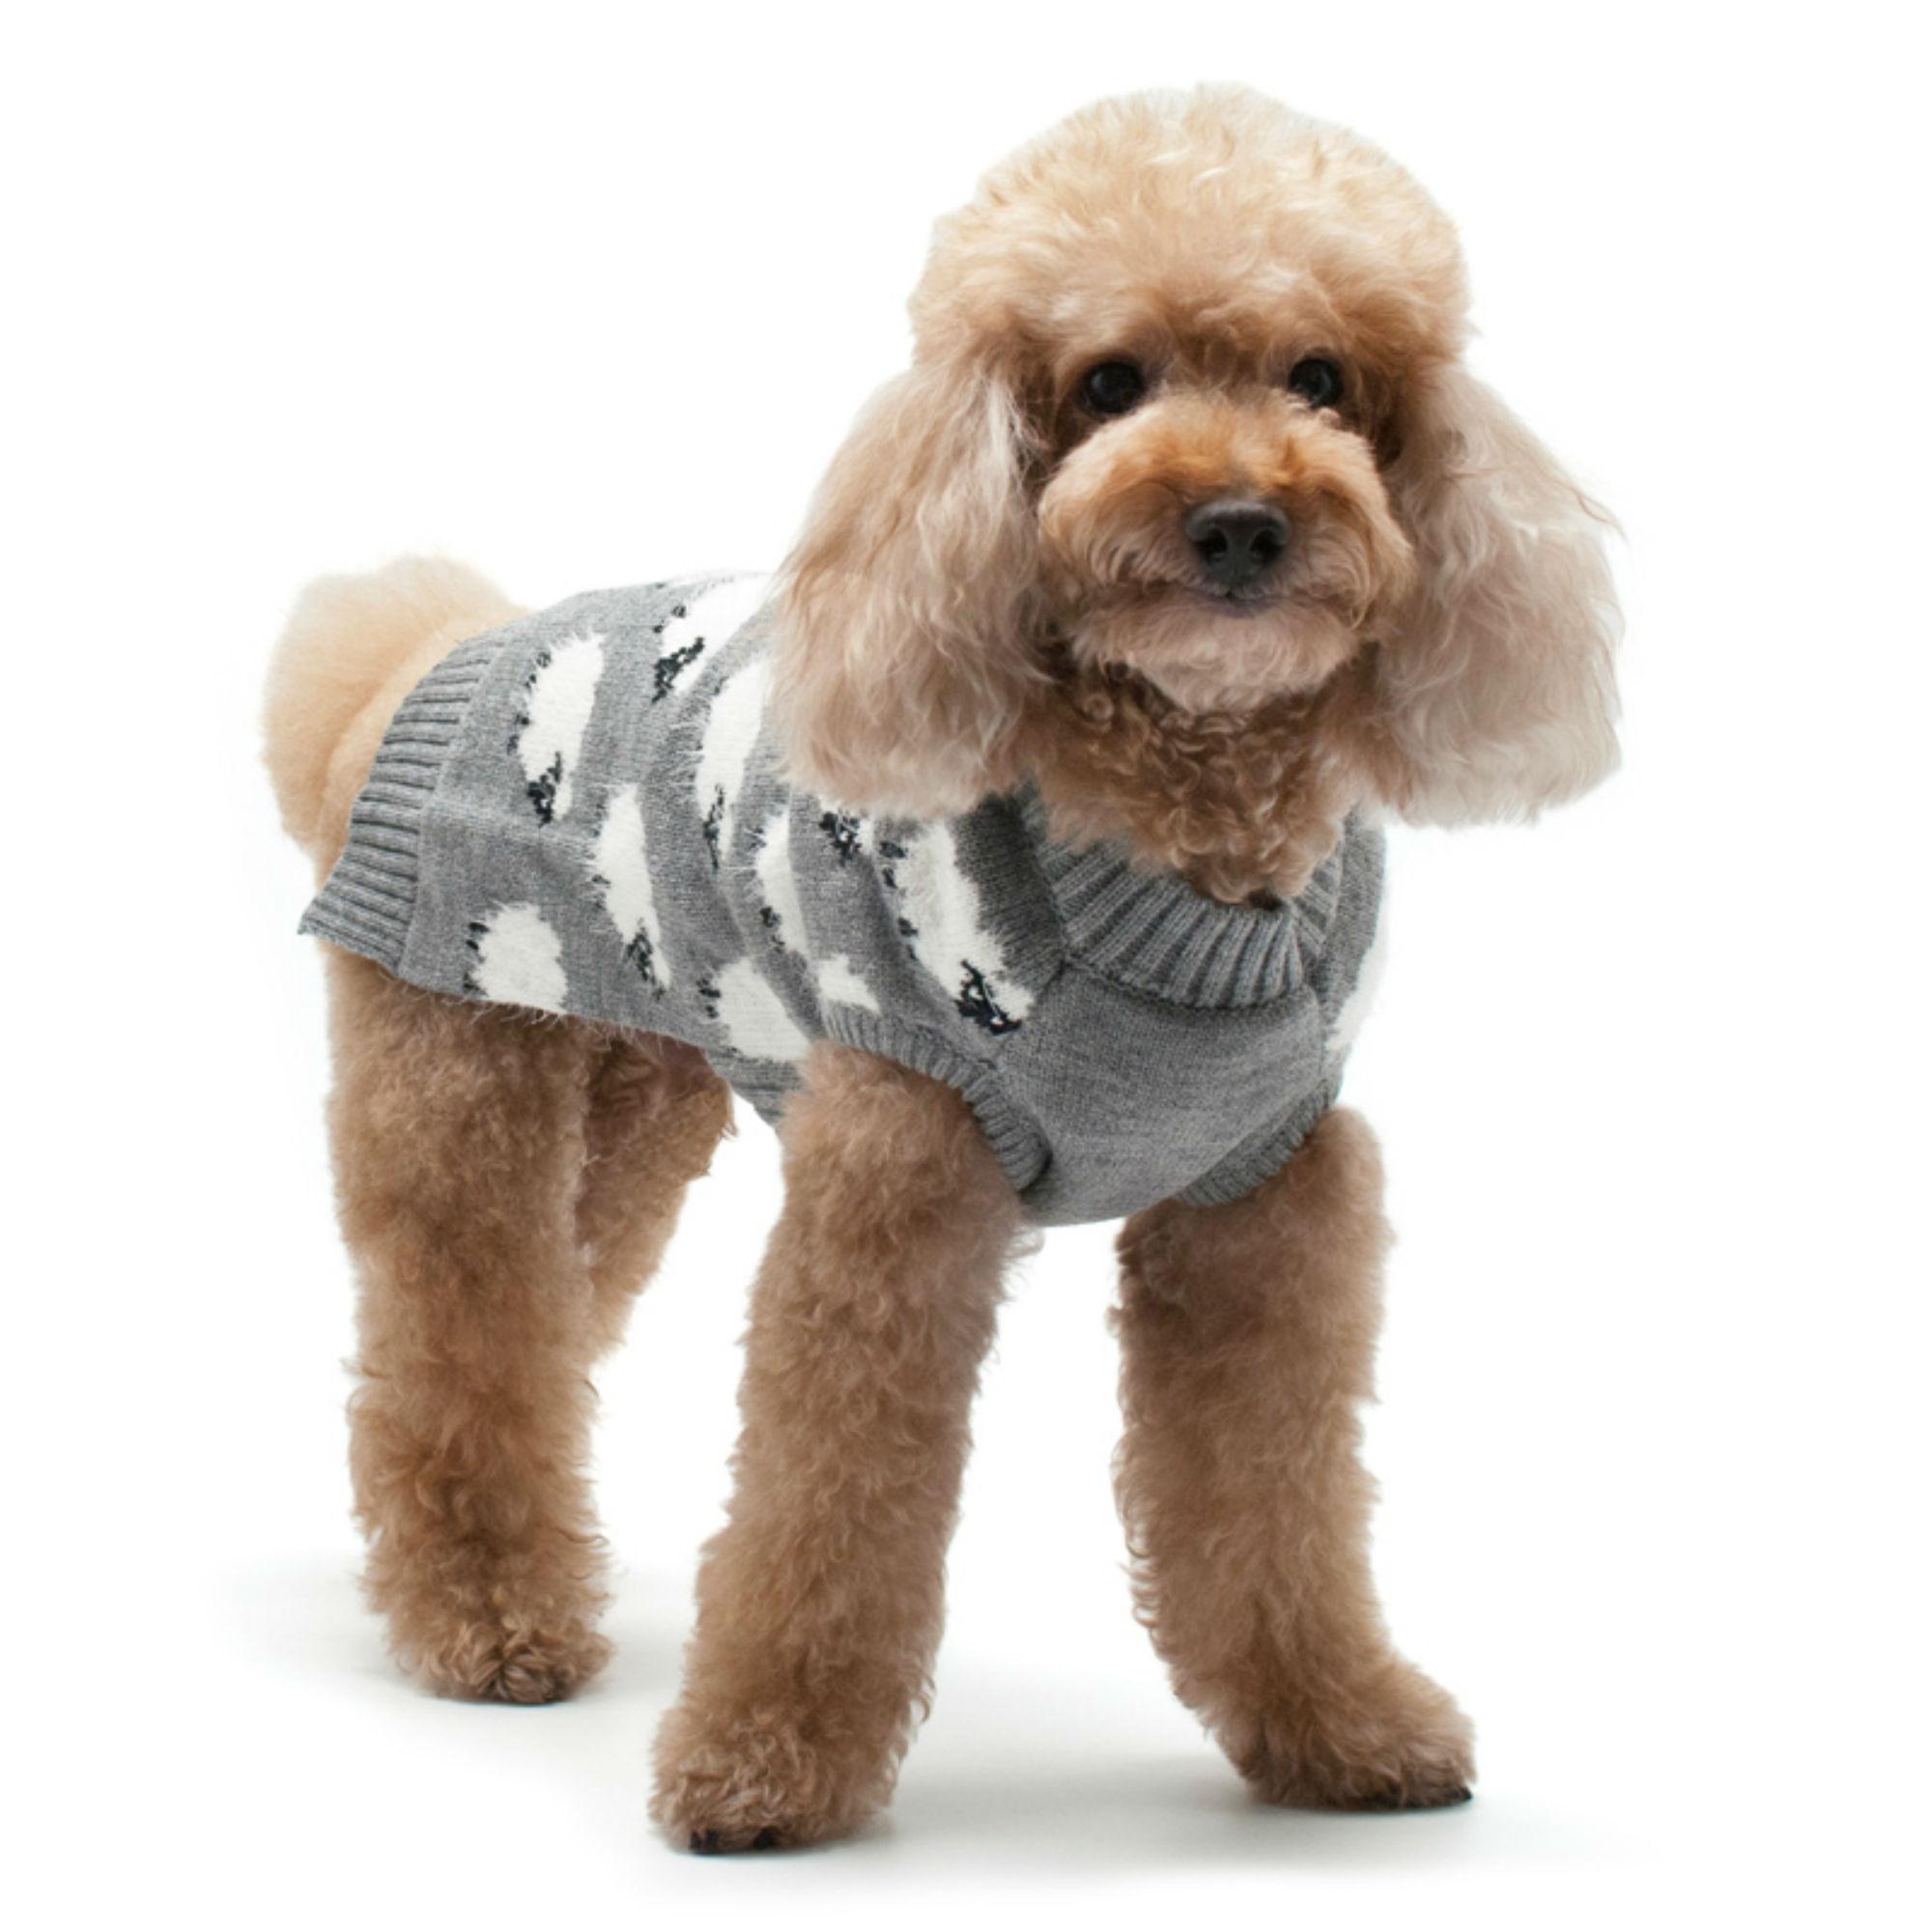 Sheep Dog Sweater by Dogo - Gray